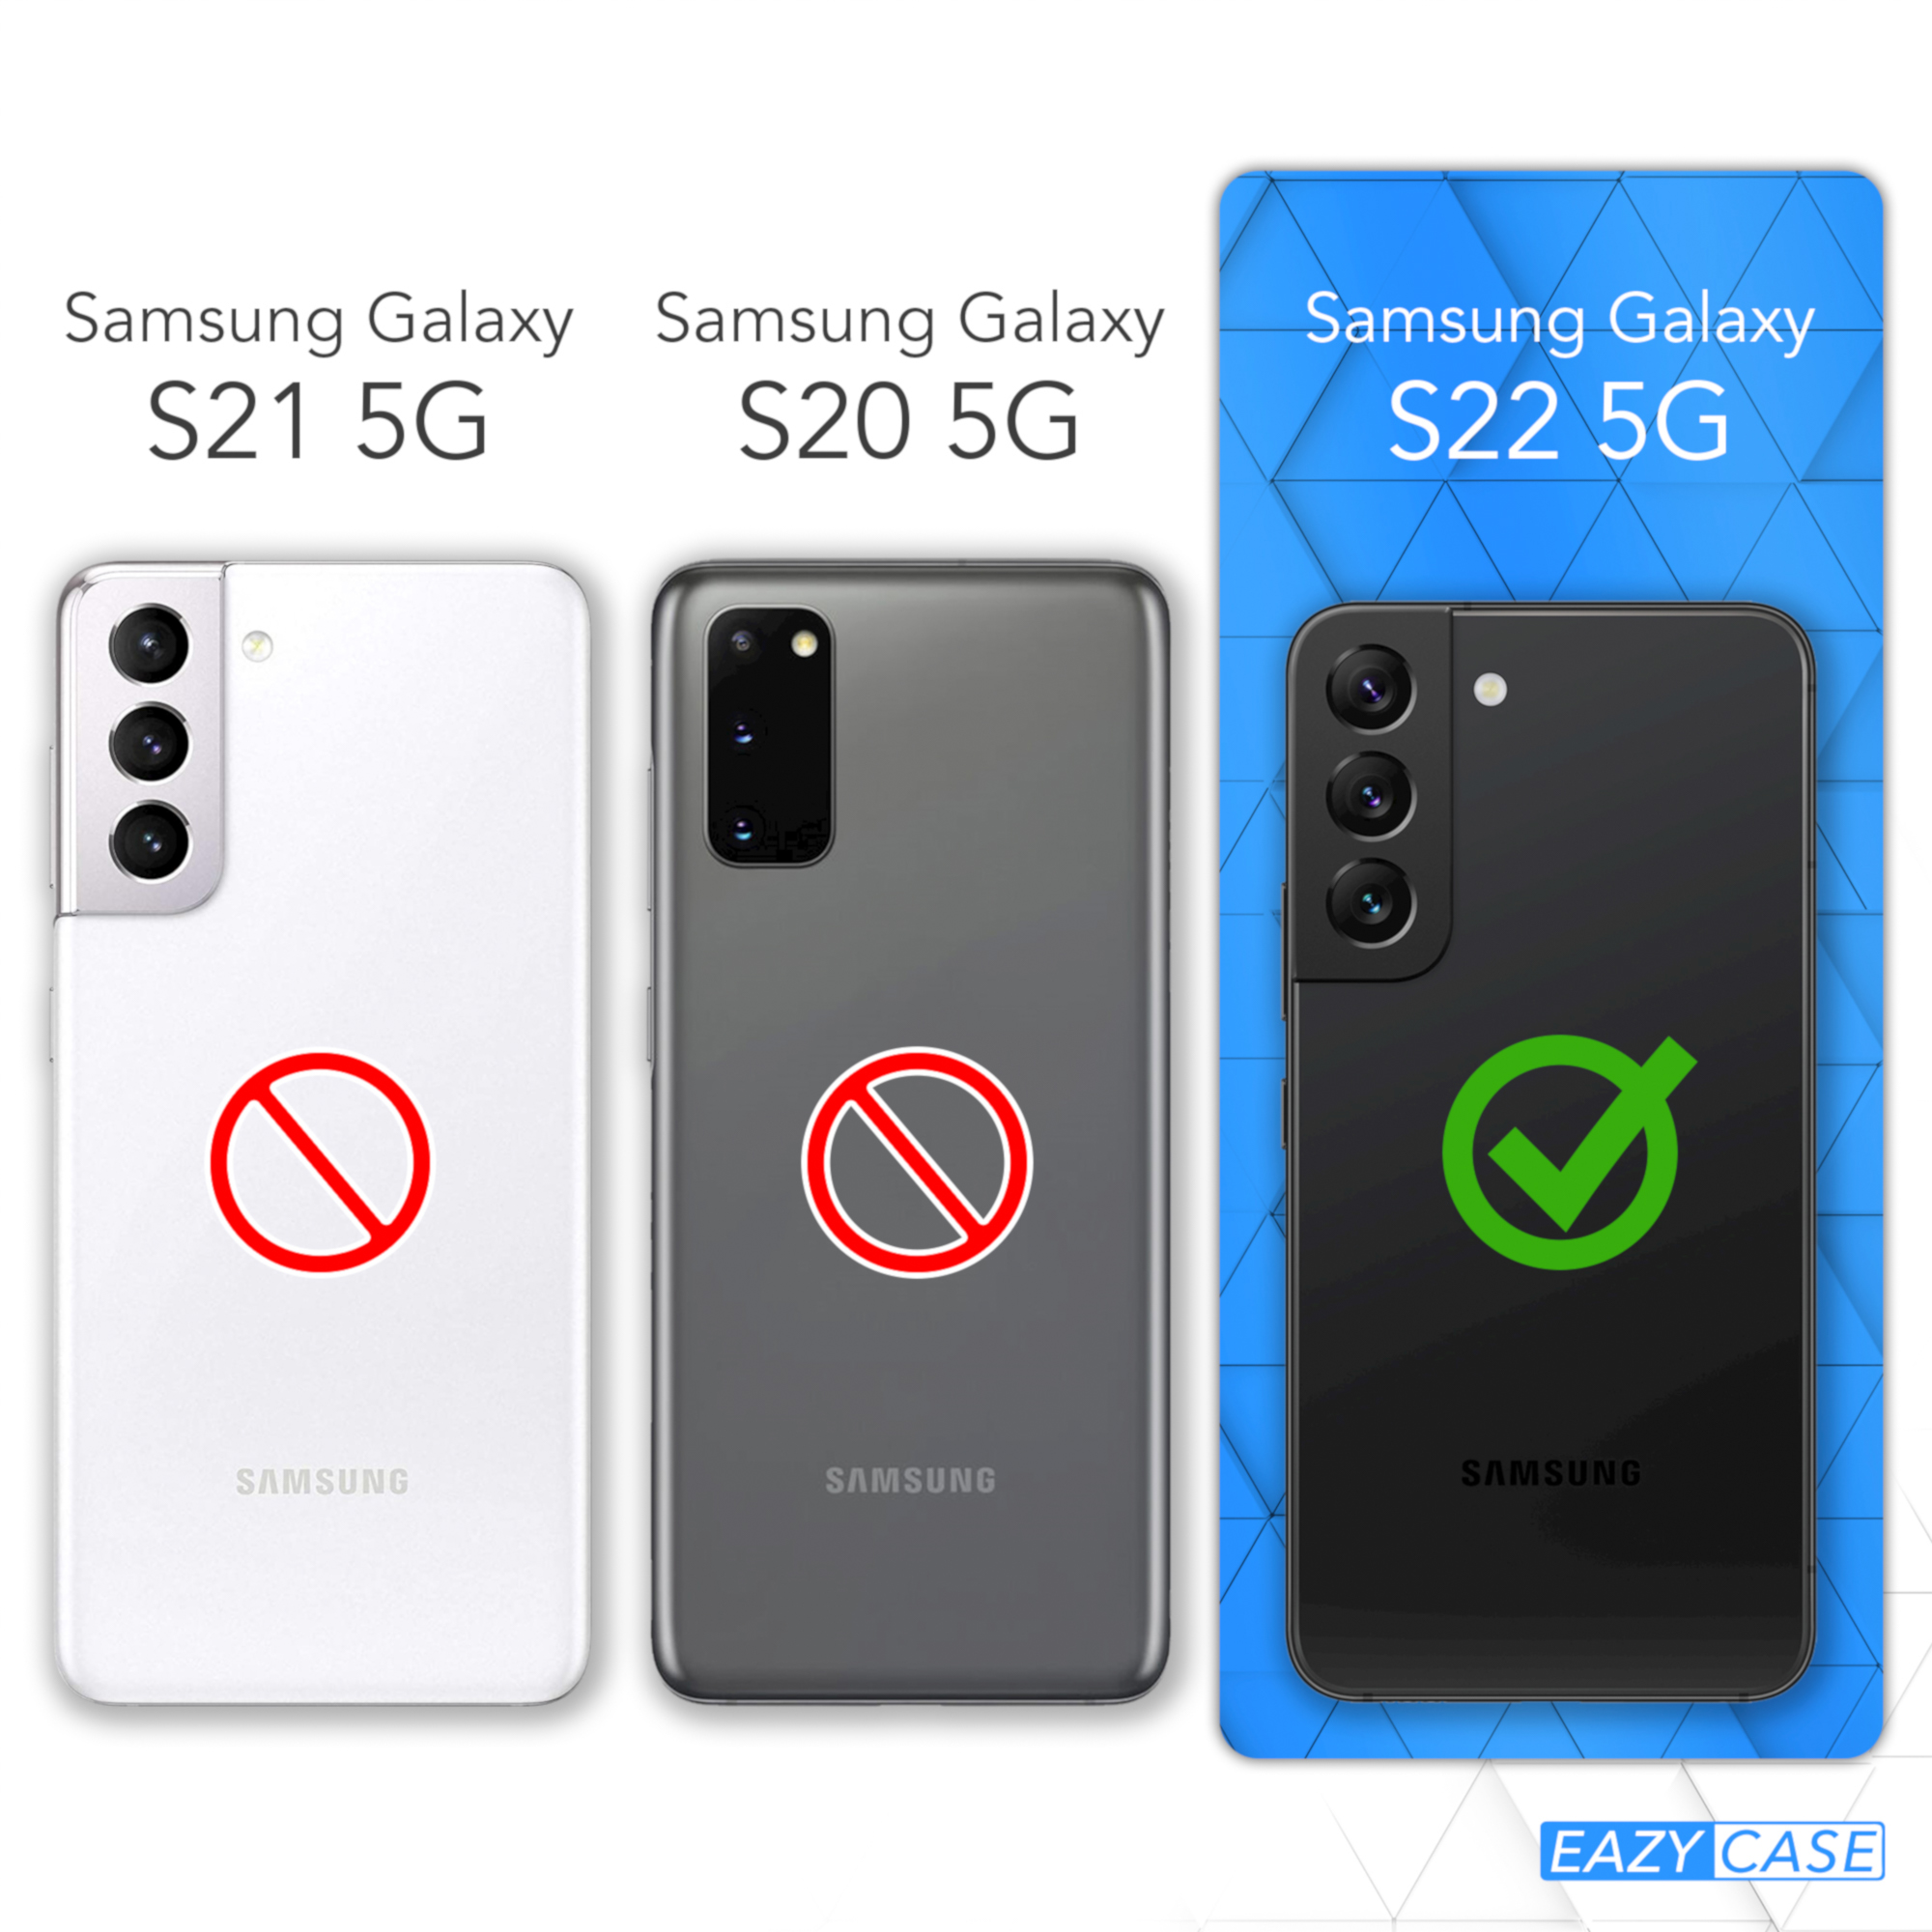 EAZY CASE Slimcover Clear, 5G, S22 Galaxy Backcover, Durchsichtig Samsung